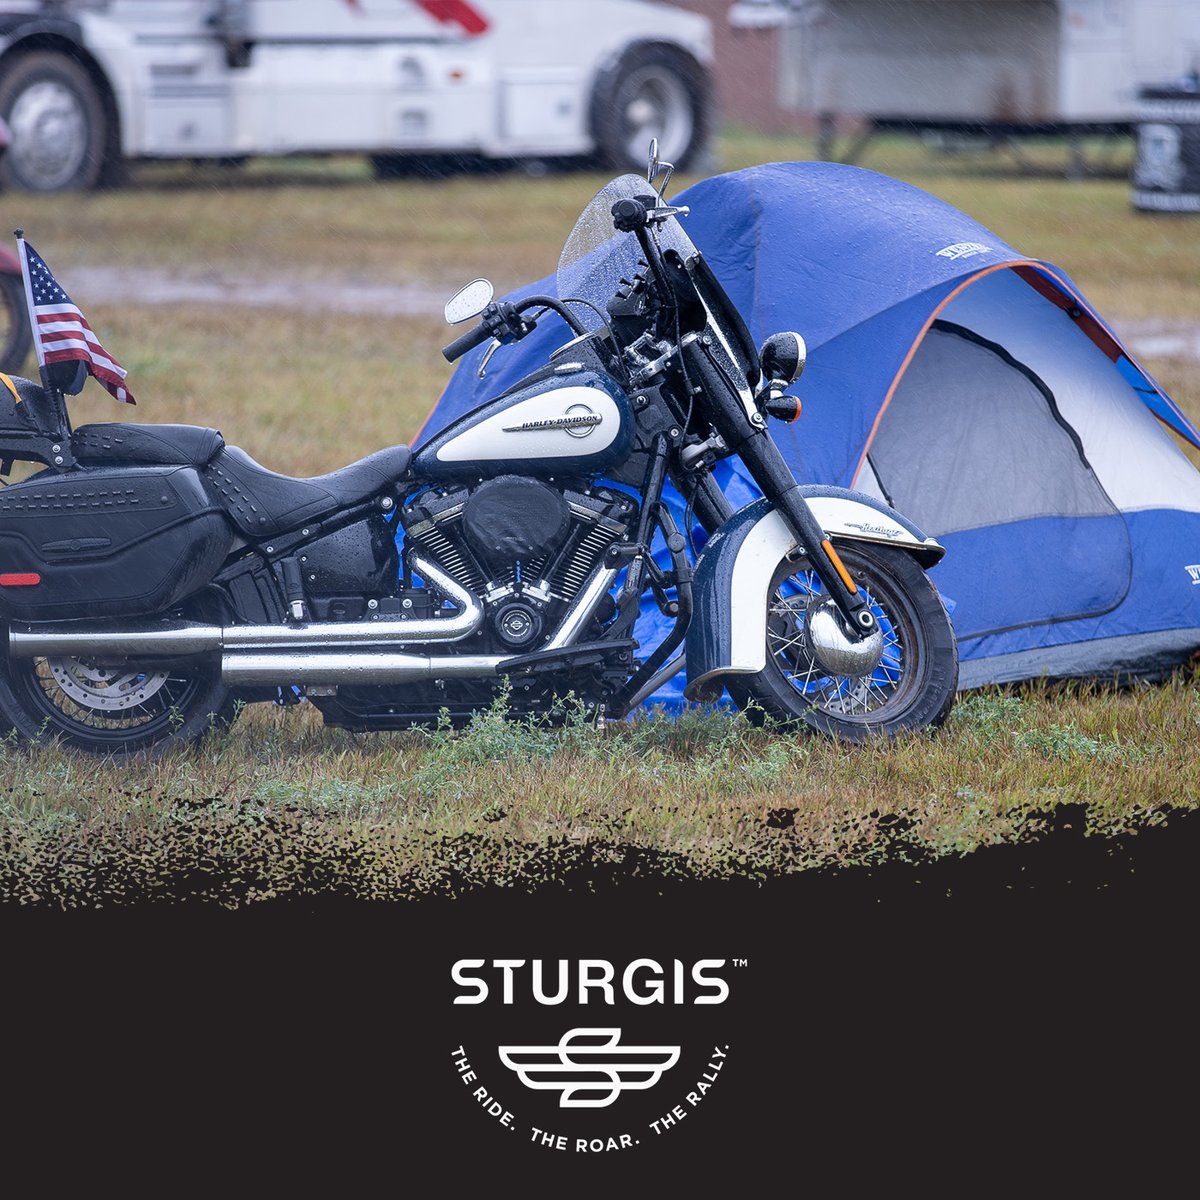 Sturgis goer essentials: - A Harley - A tent (optional) #sturgis #sturgisrally